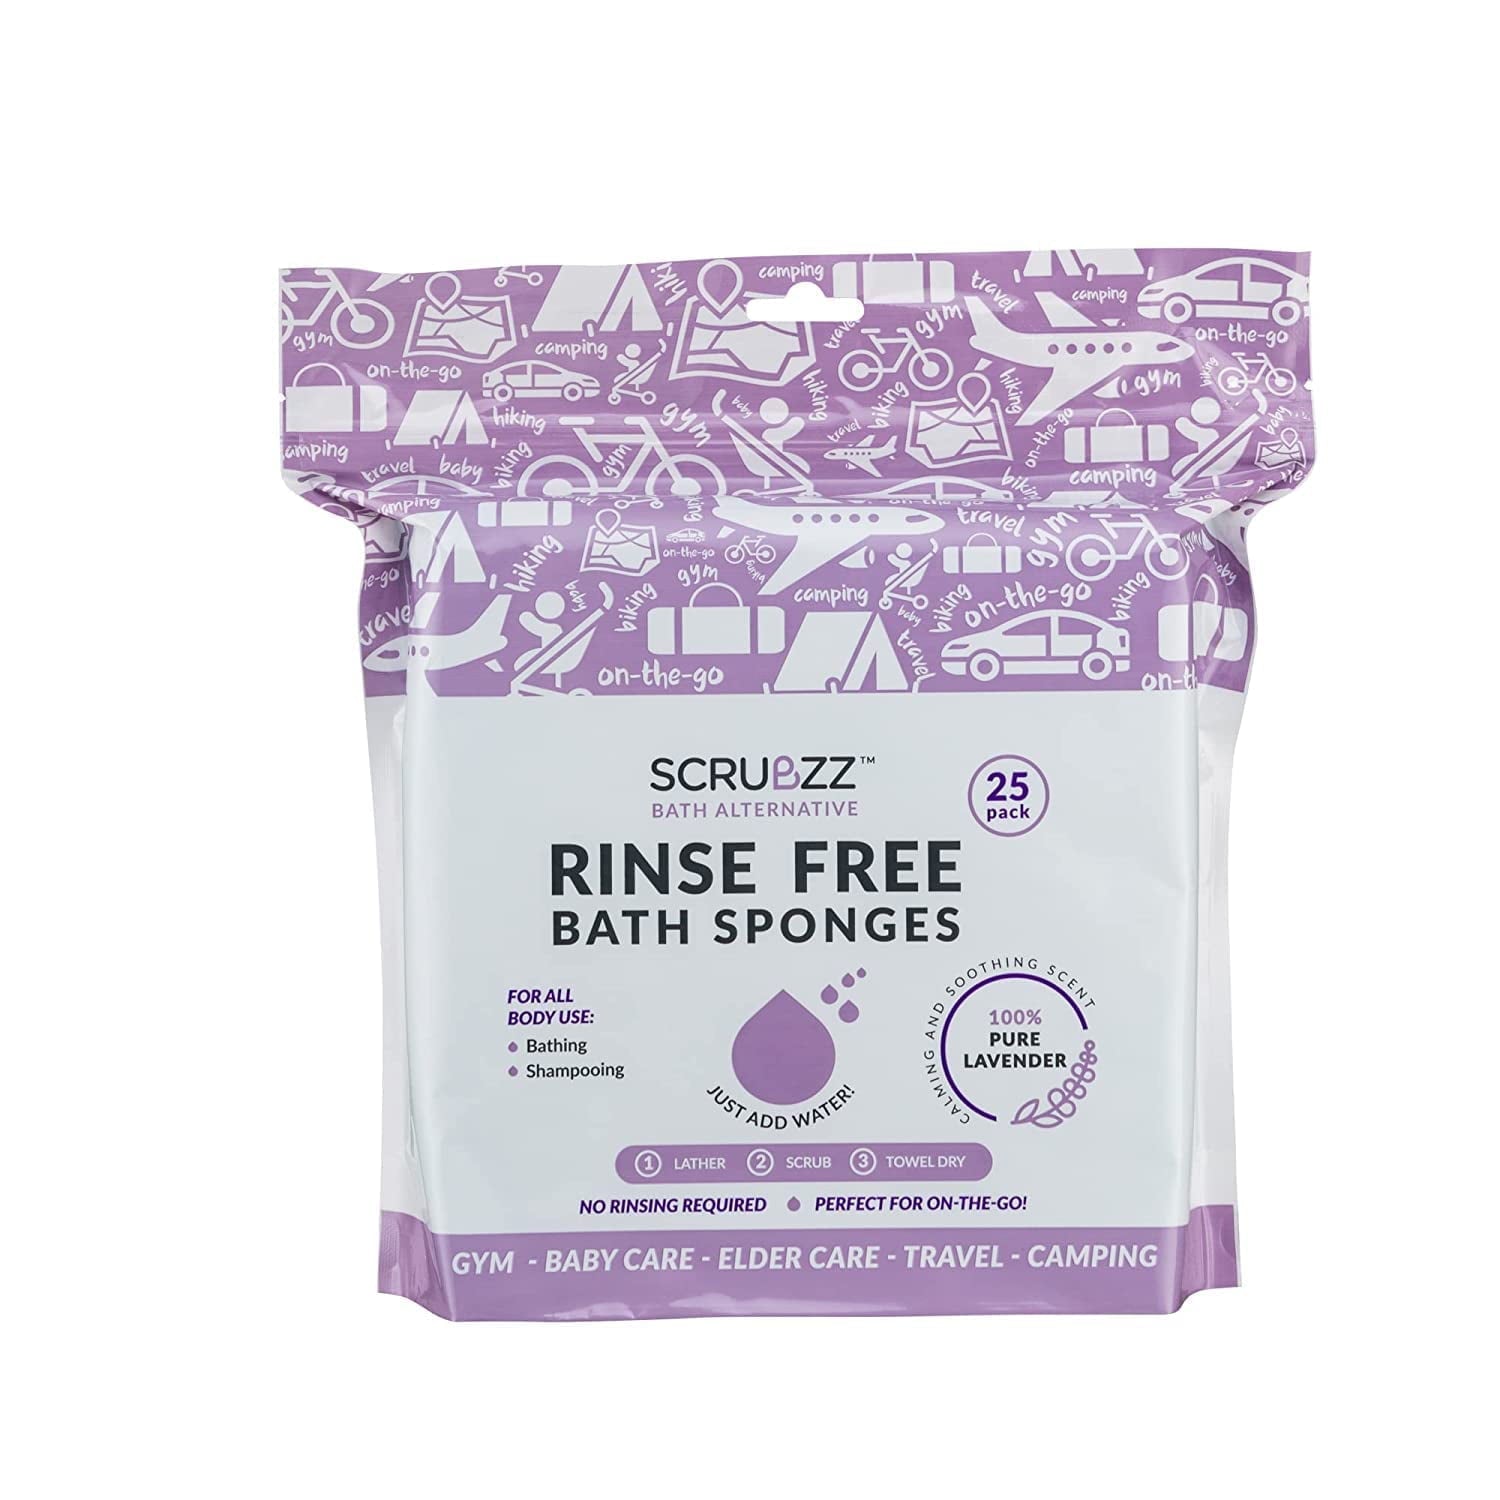 Scrubzzz Rinse-Free Bath Sponges - 25 pack - Lavender